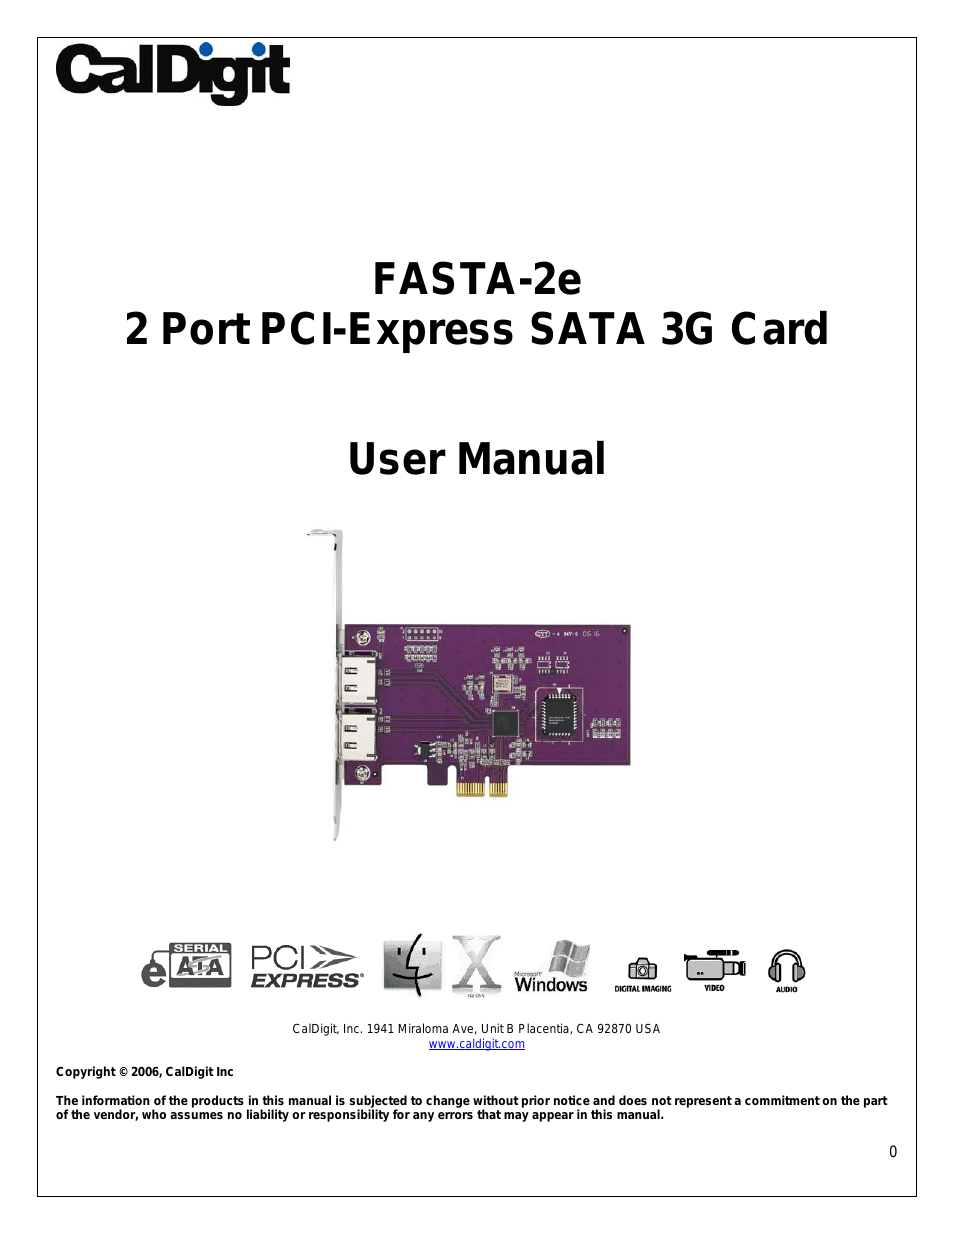 FASTA-2e 2 Port PCI-Express SATA 3G Card